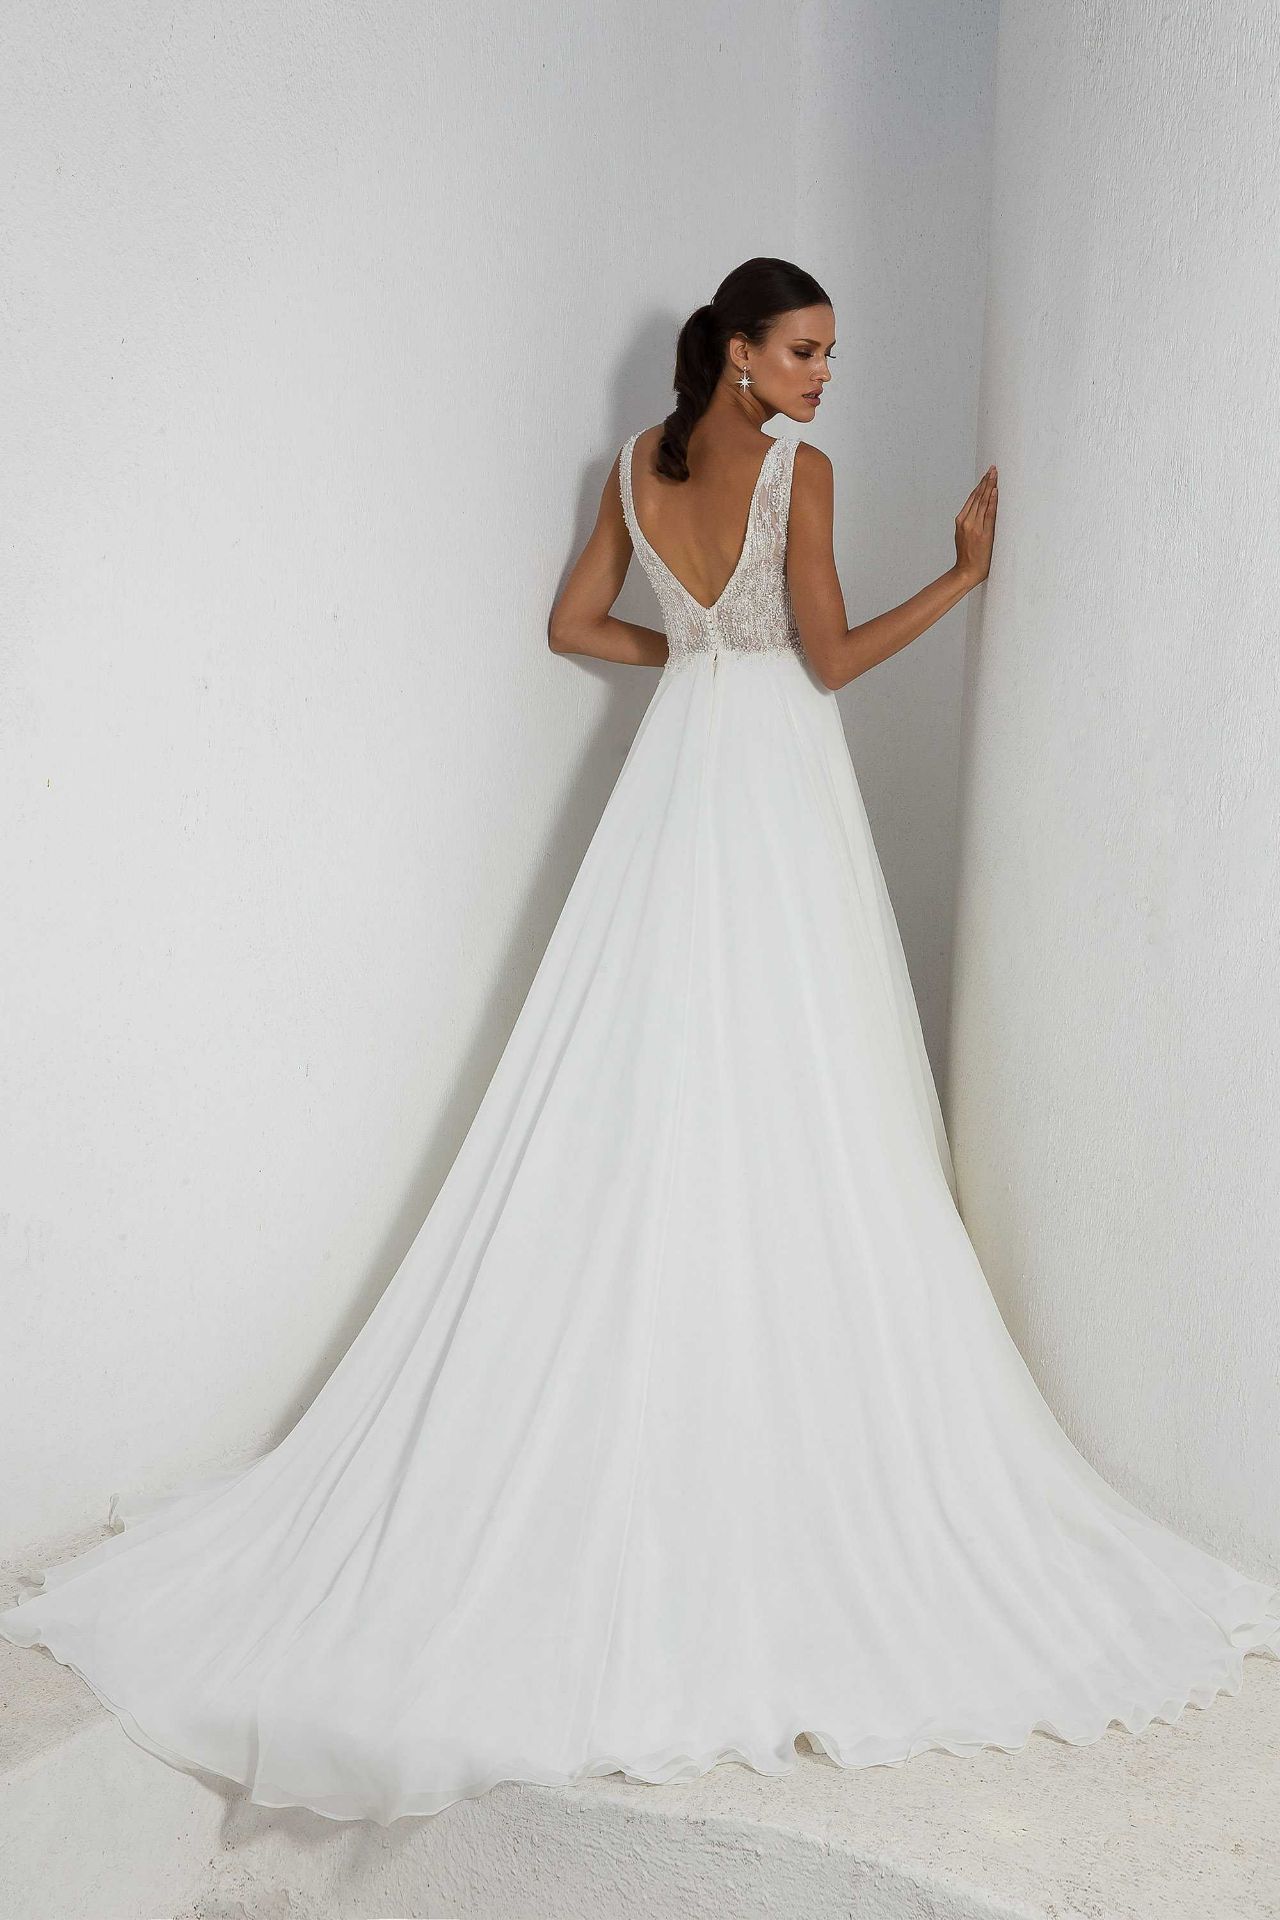 1 x Justin Alexander Designer Wedding Dress With Sheer Beaded Bodice - UK Size 10 - RRP £1,390